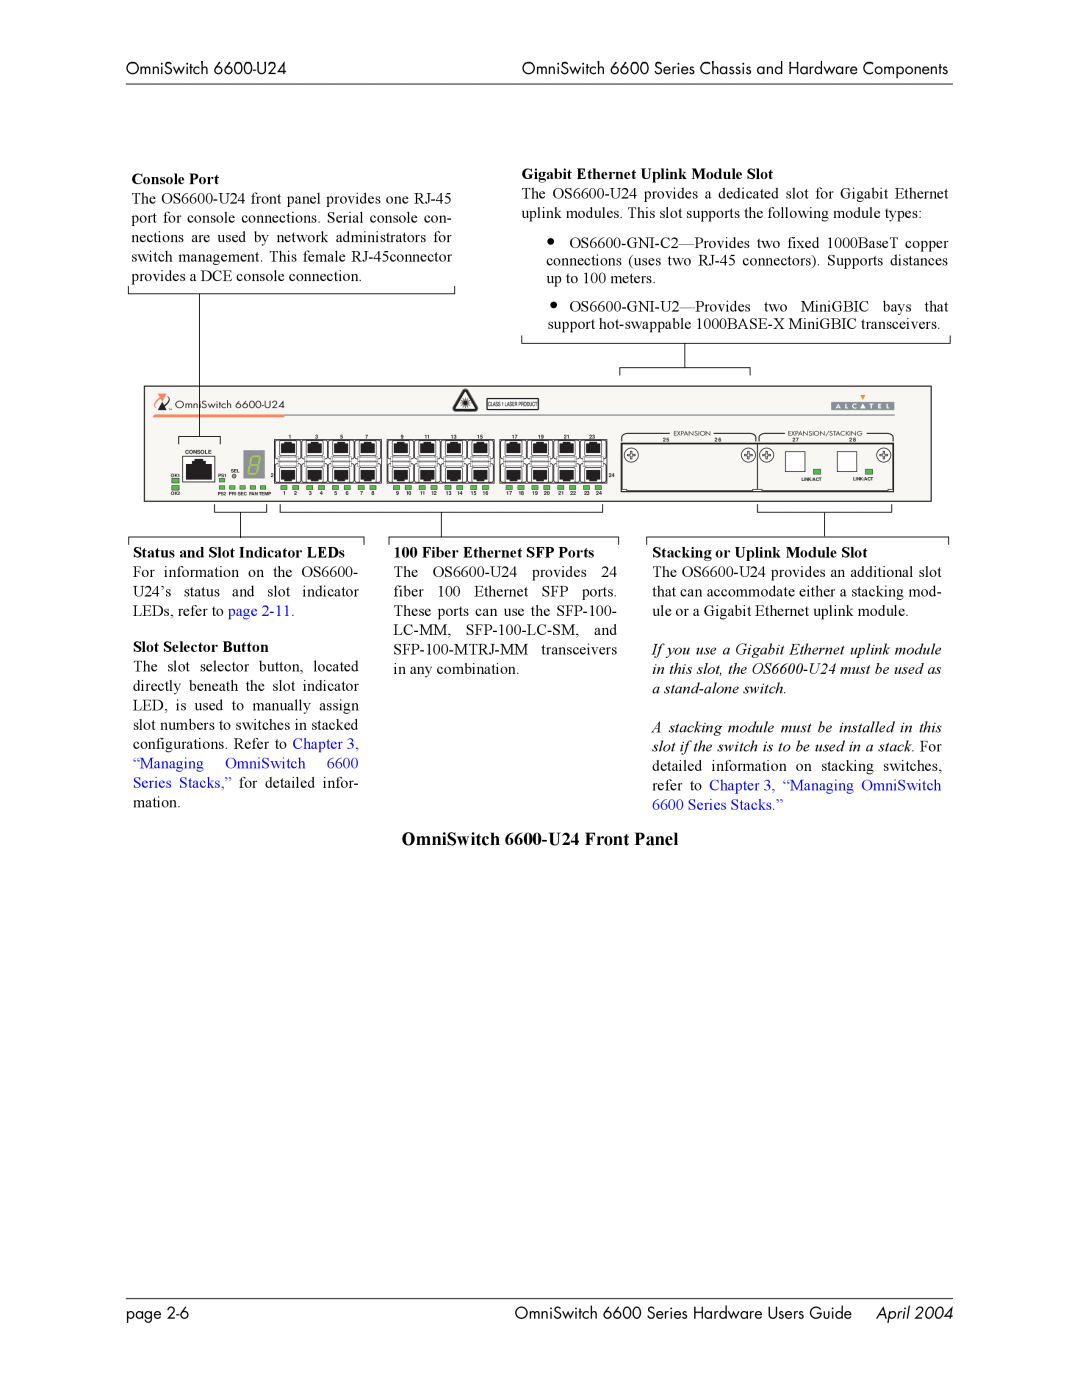 Alcatel-Lucent 6600 Series, 6648, 6624 OmniSwitch 6600-U24 Front Panel, Console Port, Gigabit Ethernet Uplink Module Slot 